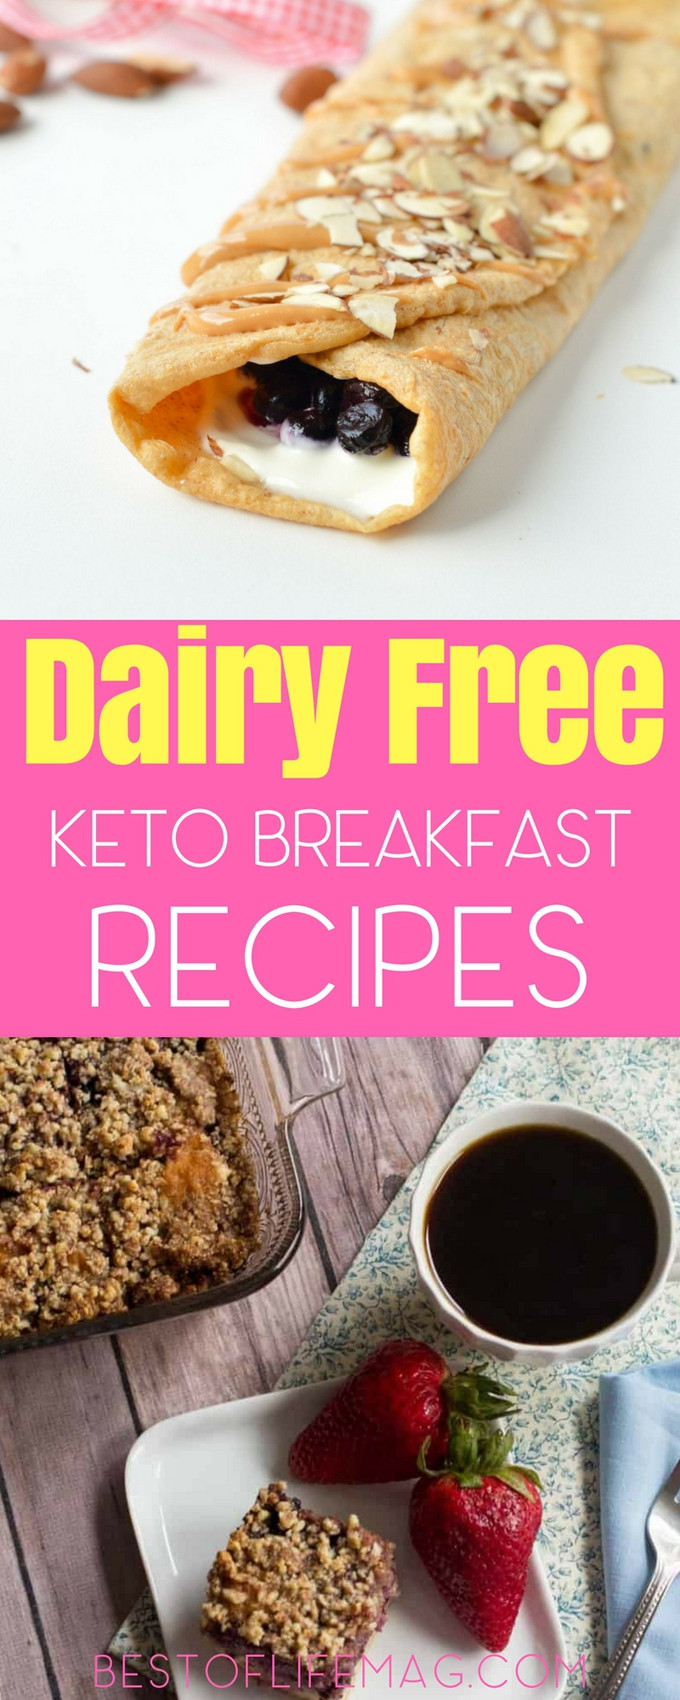 Dairy Free Keto Recipes Easy
 Dairy Free Keto Breakfast Recipes Best of Life Magazine